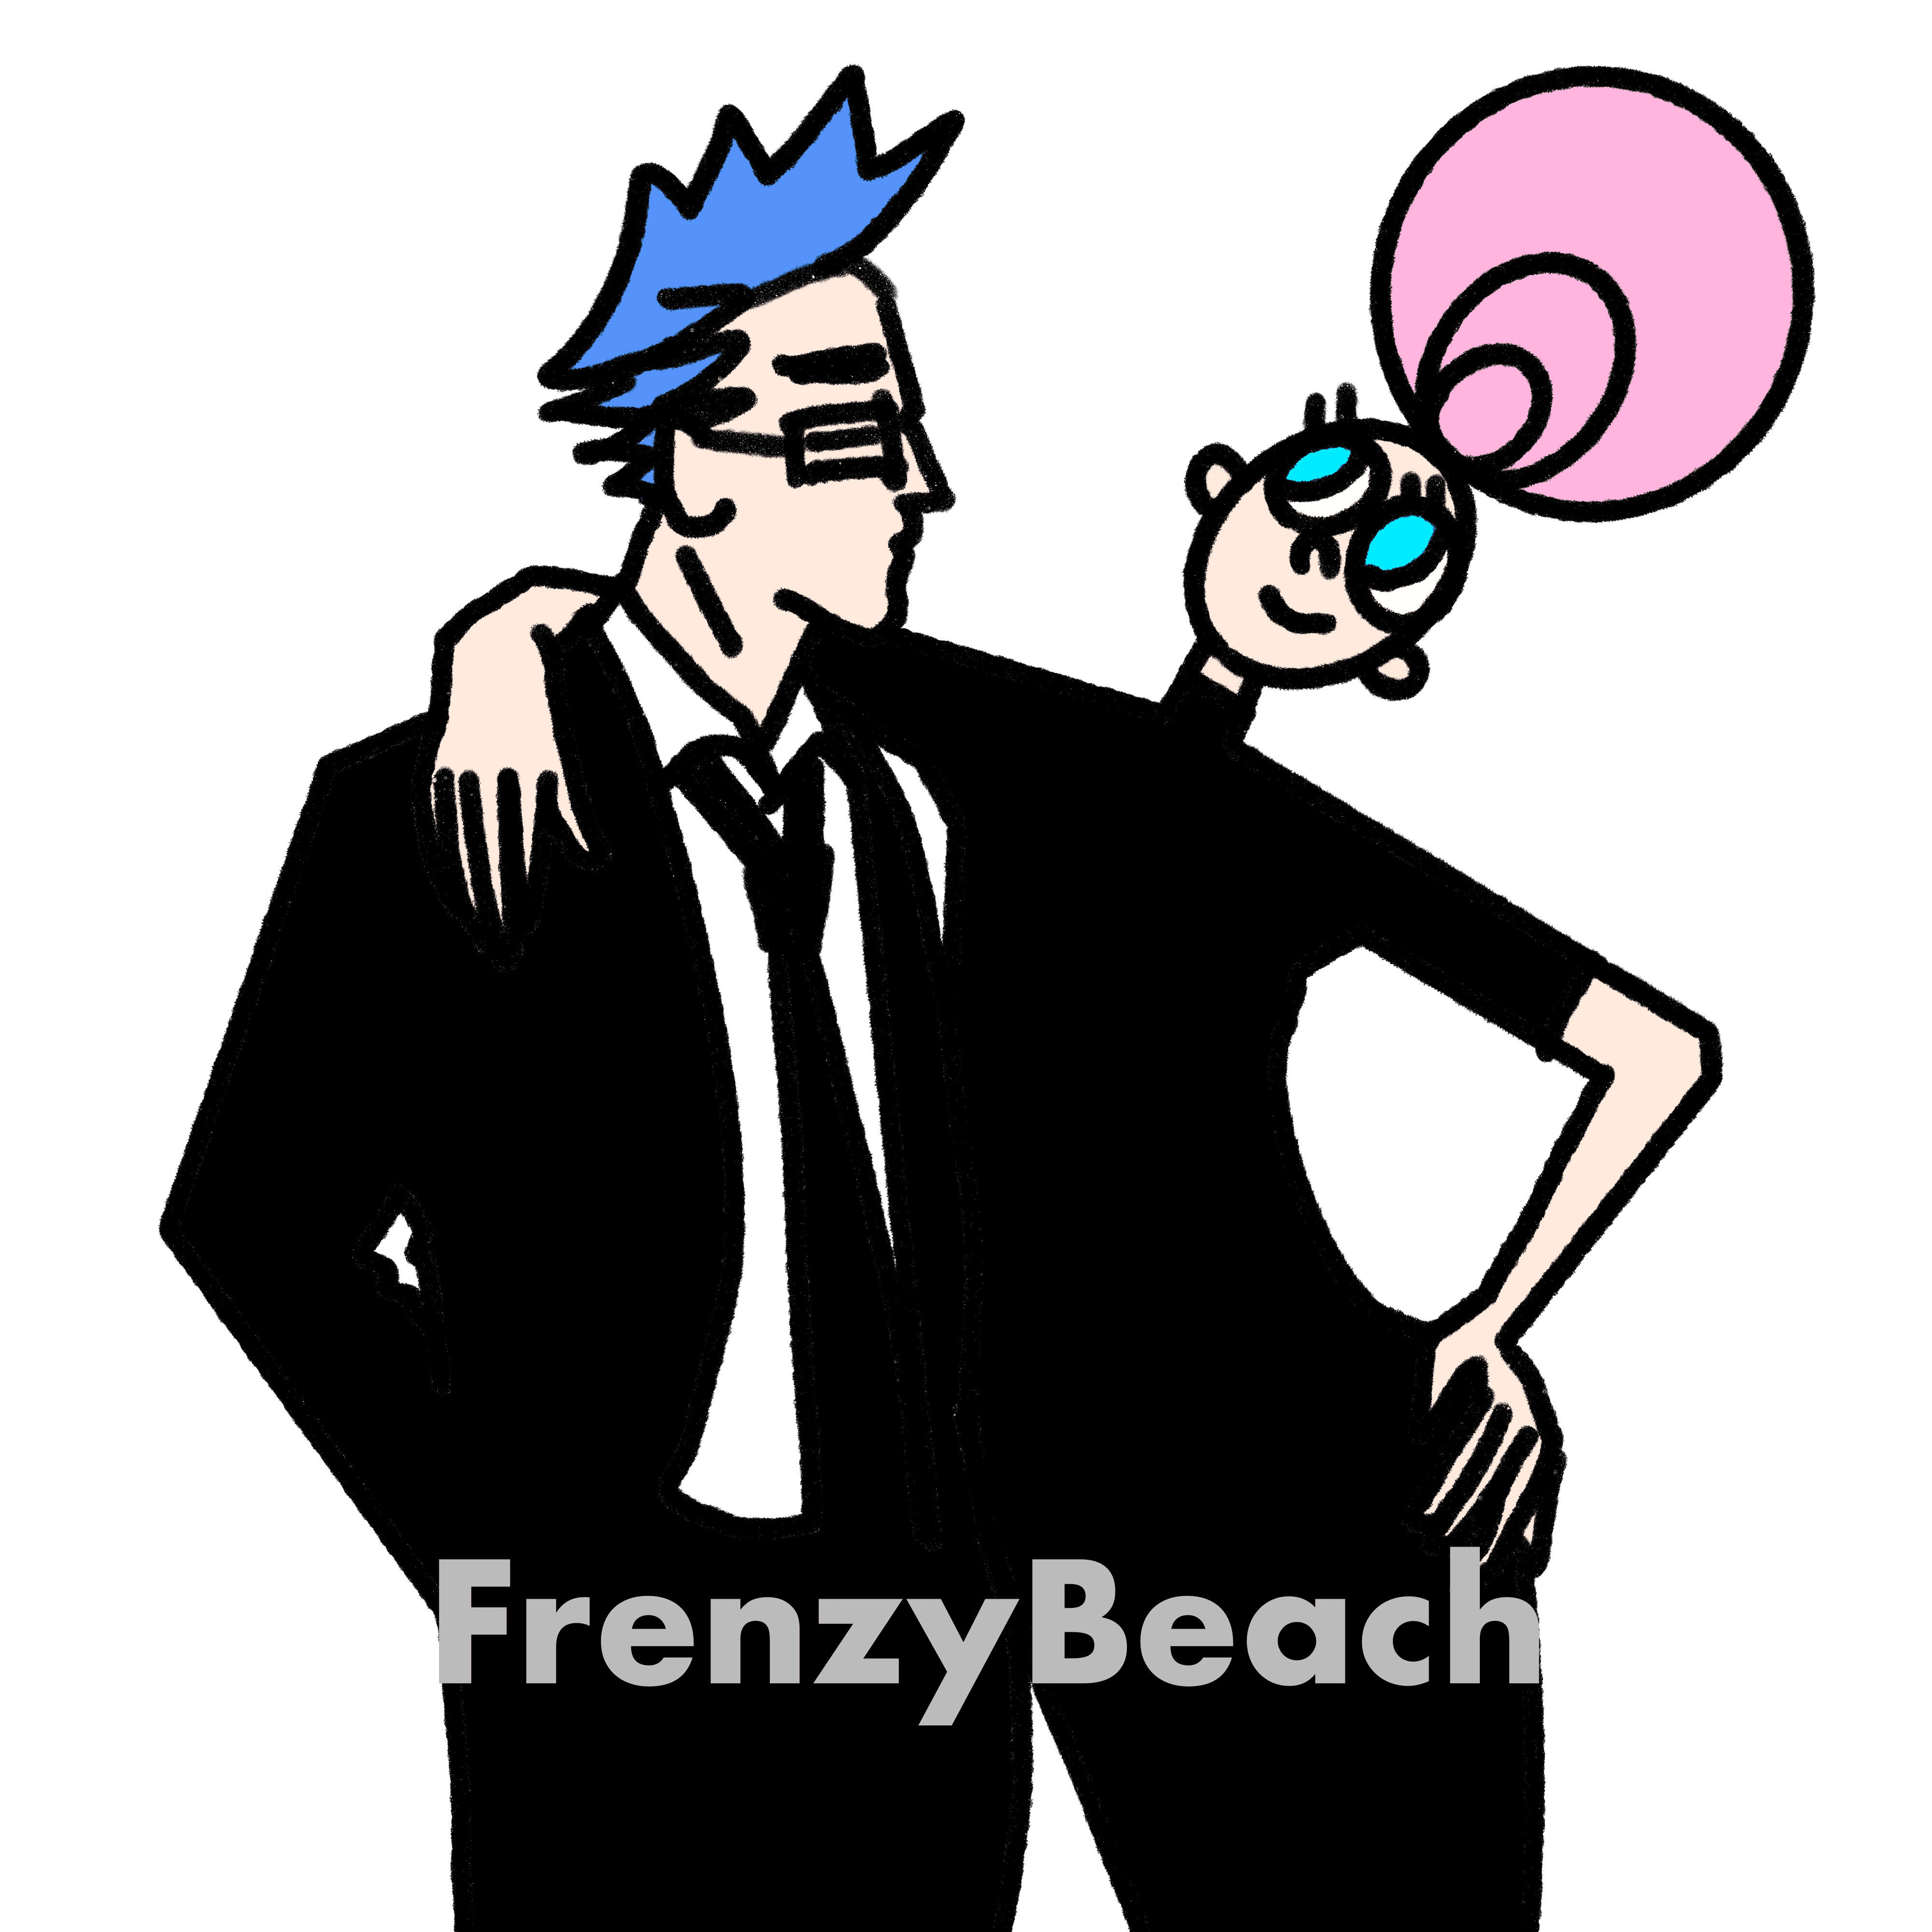 FrenzyBeach